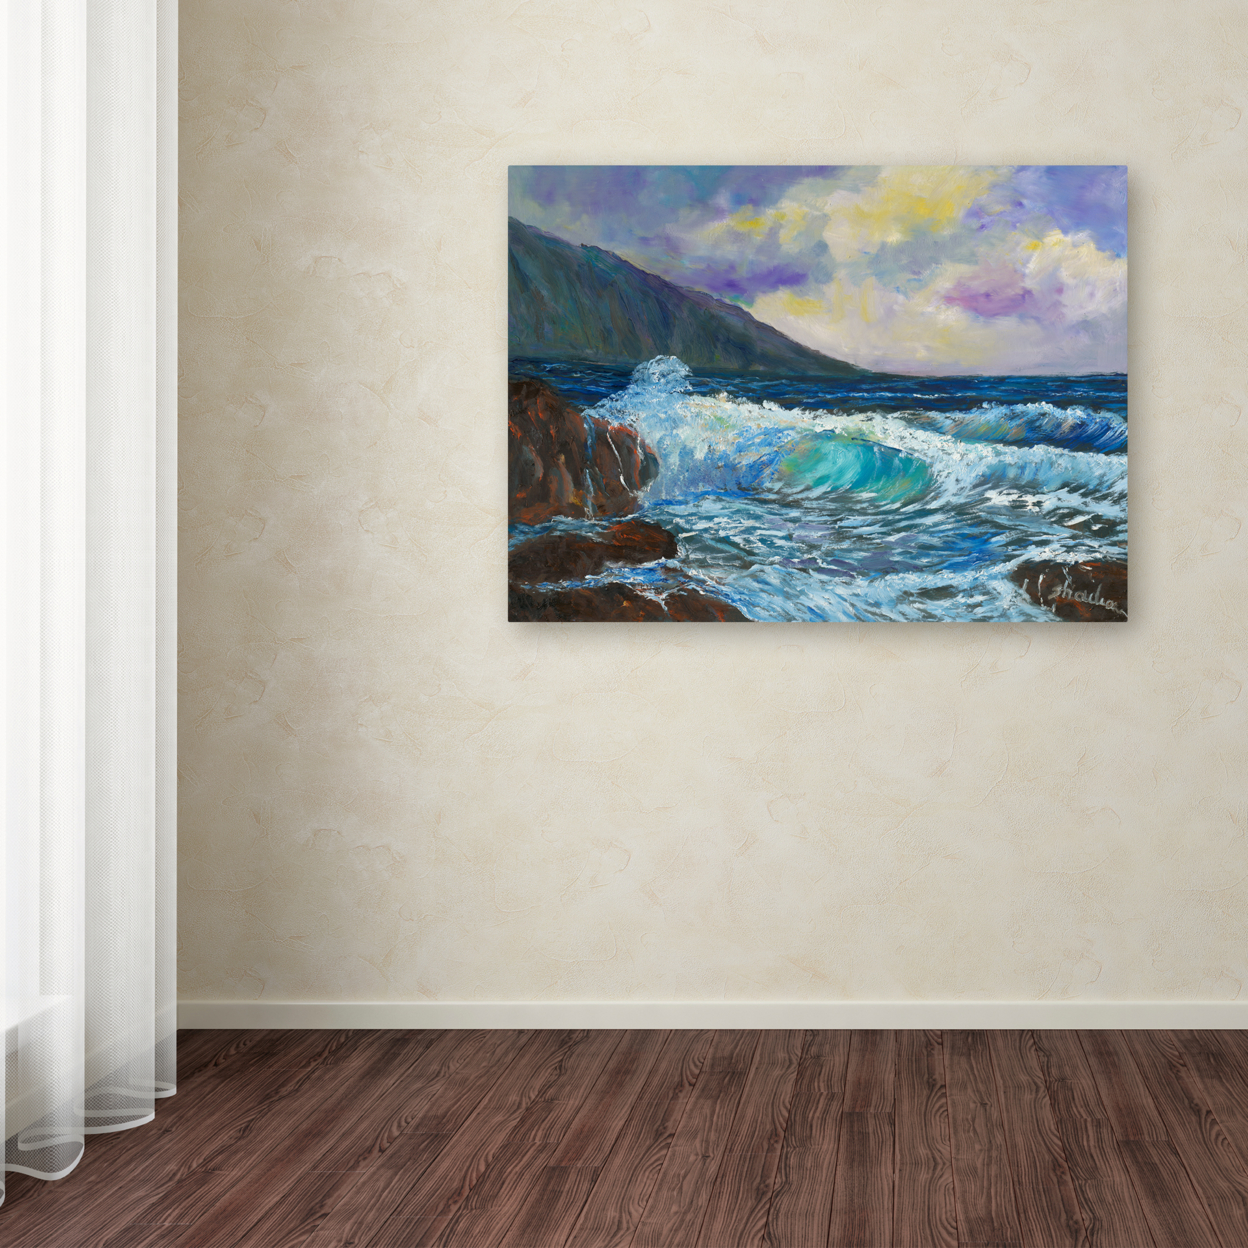 Manor Shadian 'Maui's Enchanting Seas' Canvas Wall Art 35 X 47 Inches